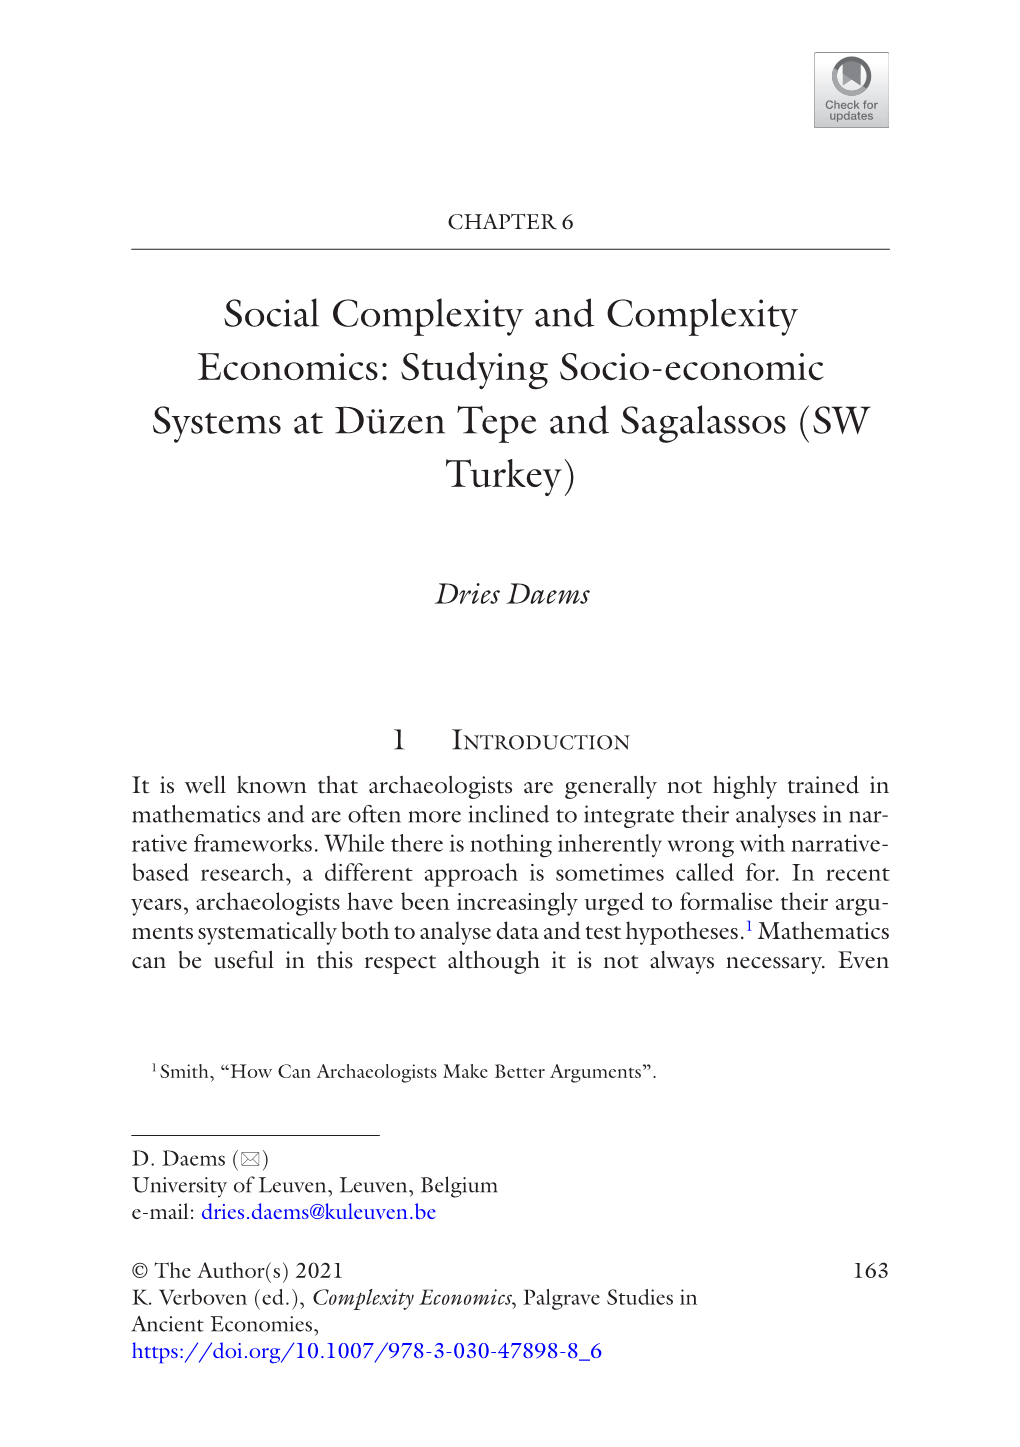 Social Complexity and Complexity Economics: Studying Socio-Economic Systems at Düzen Tepe and Sagalassos (SW Turkey)